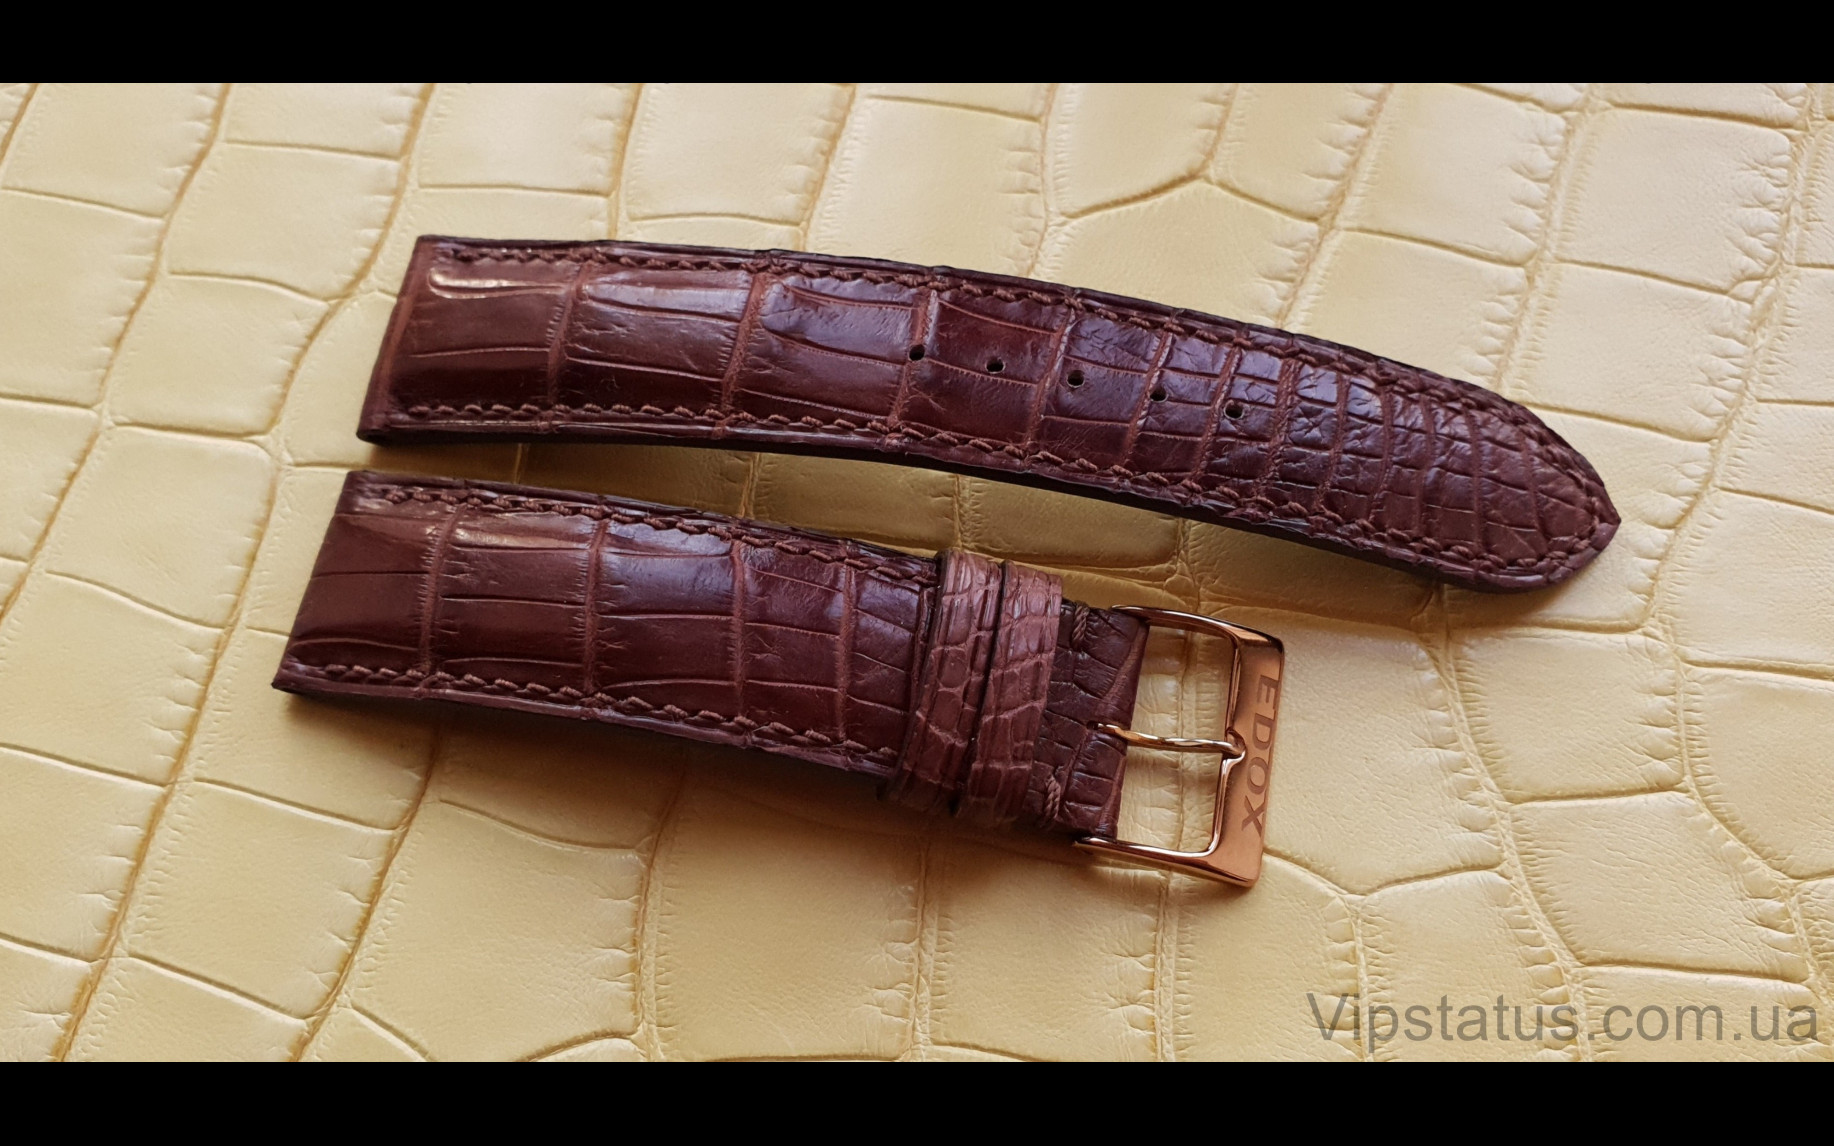 Elite Шикарный ремешок для часов Edox кожа крокодила Chic Crocodile Strap for Edox watches image 2